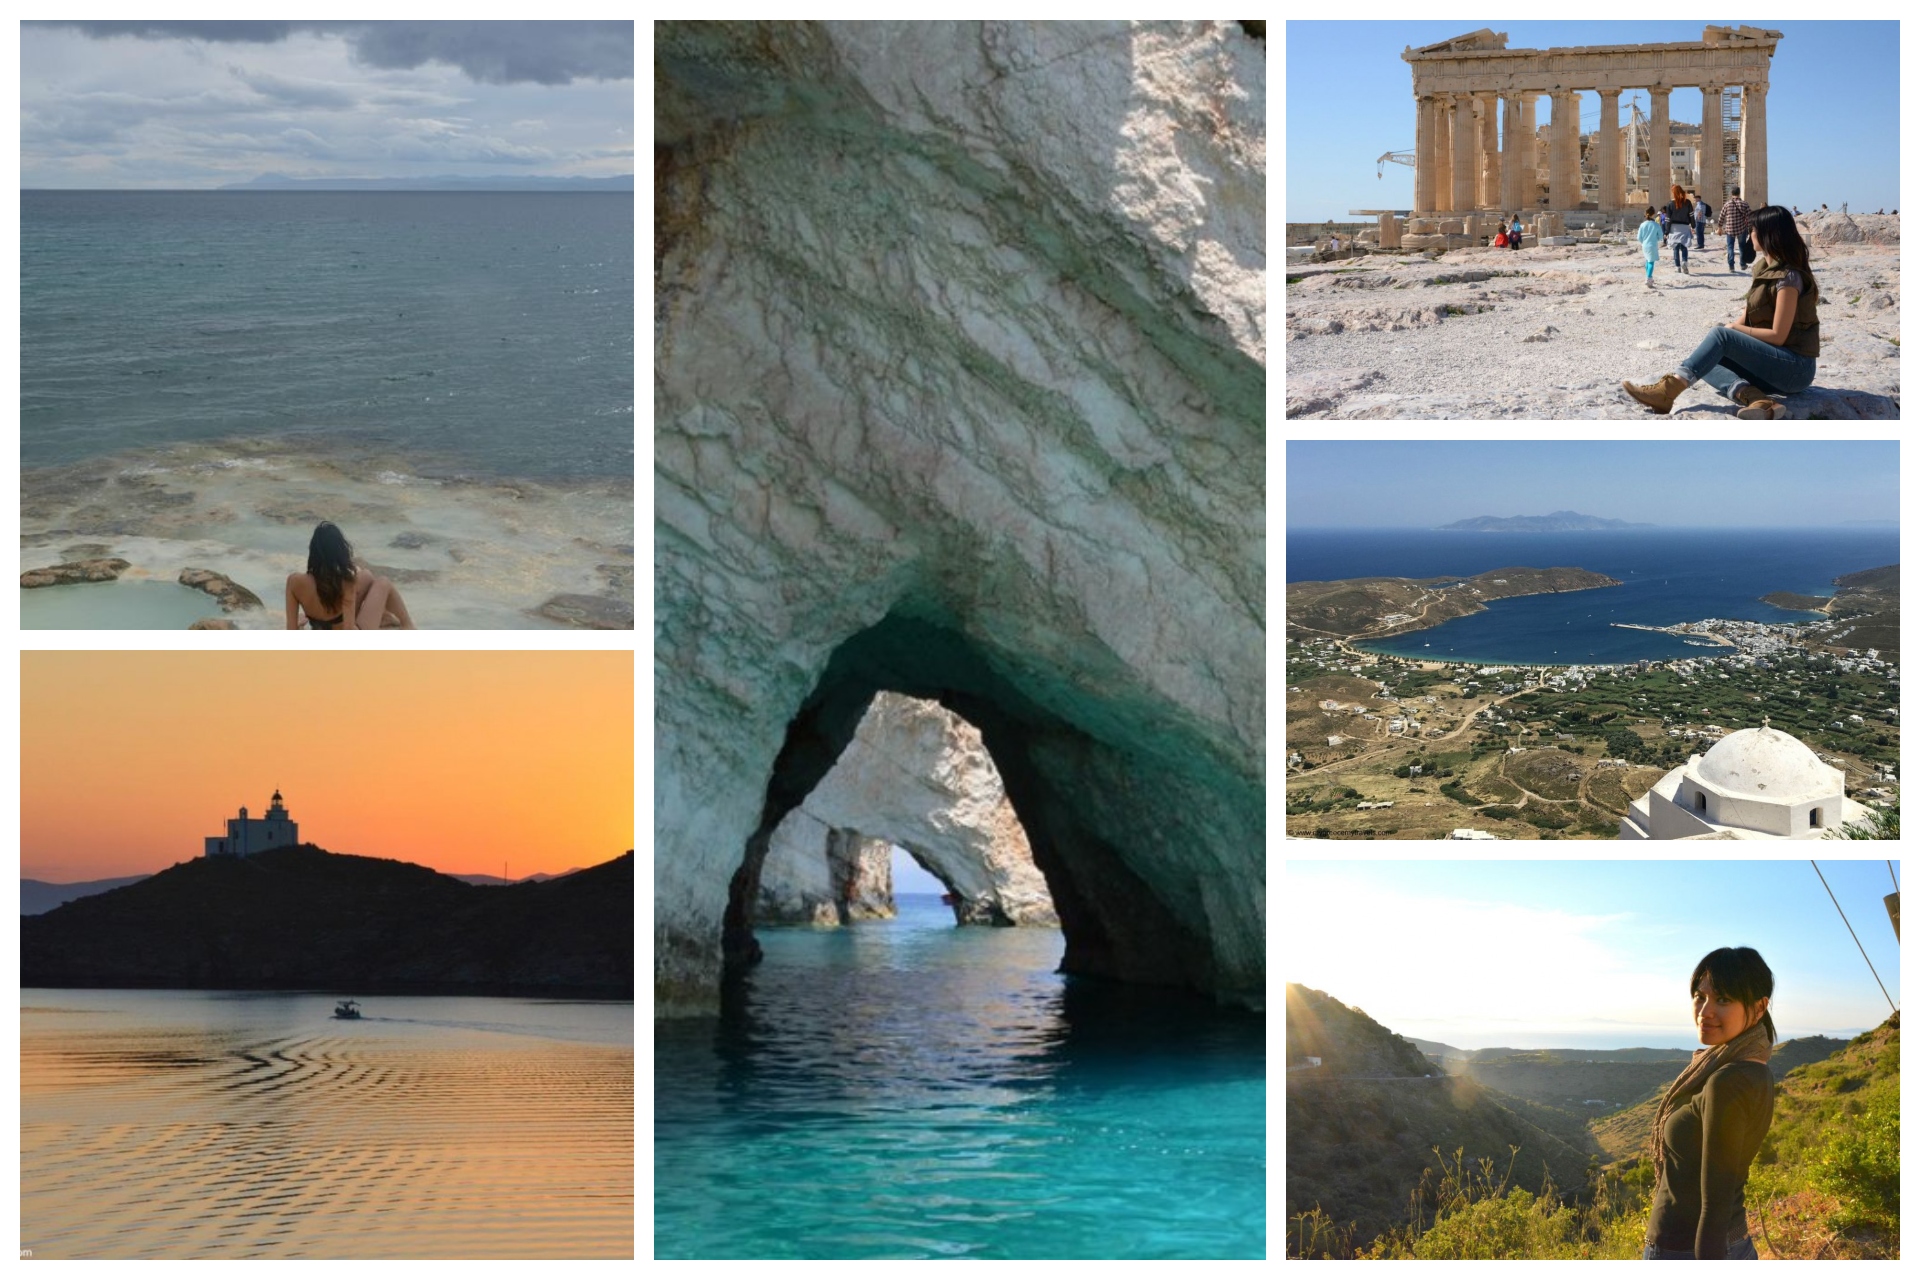 Why I love Greece…